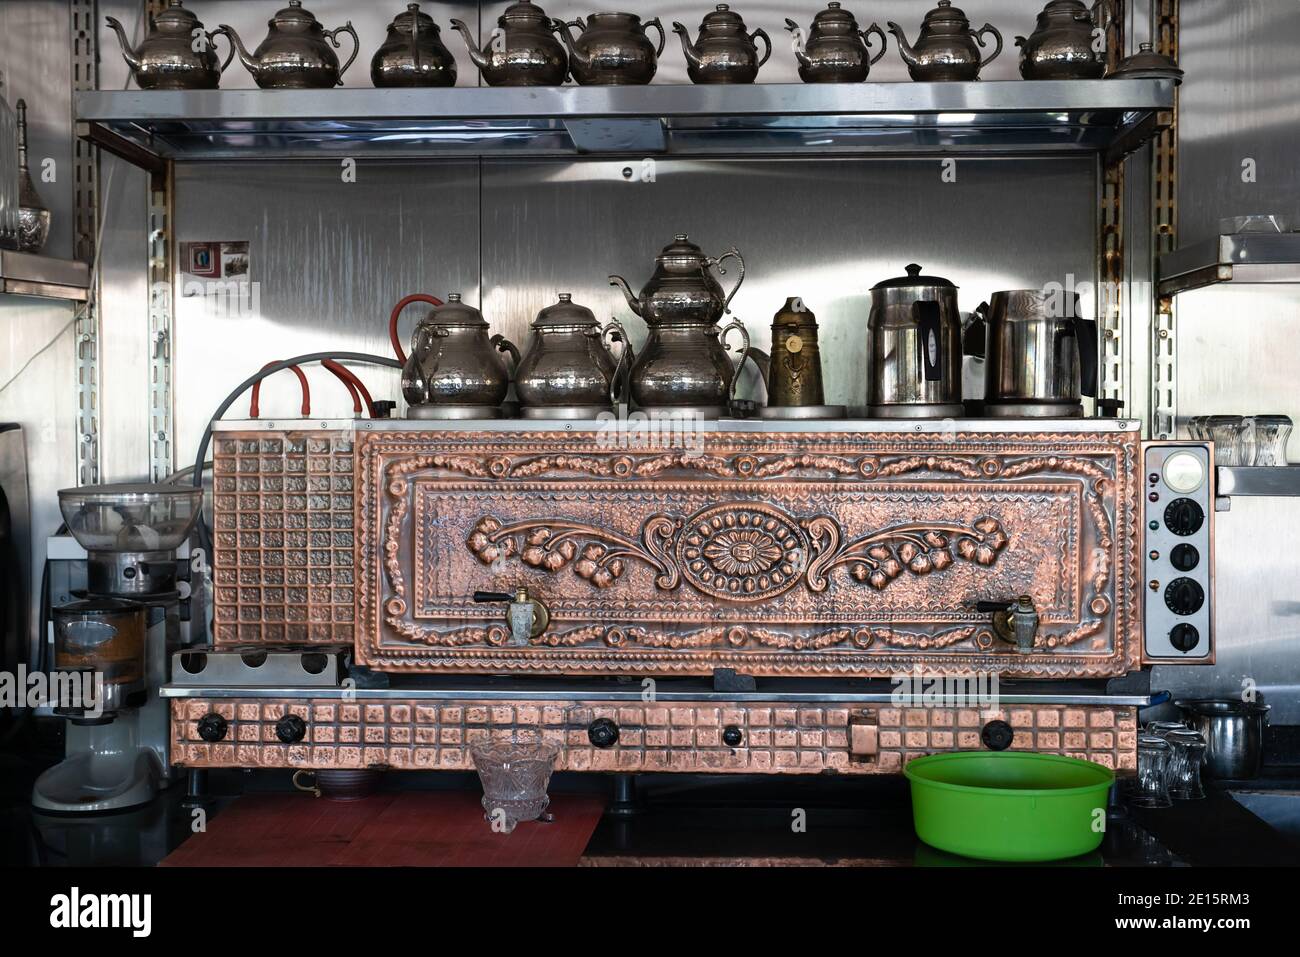 Ollas de cobre turco en una tienda/casa de té turco Foto de stock